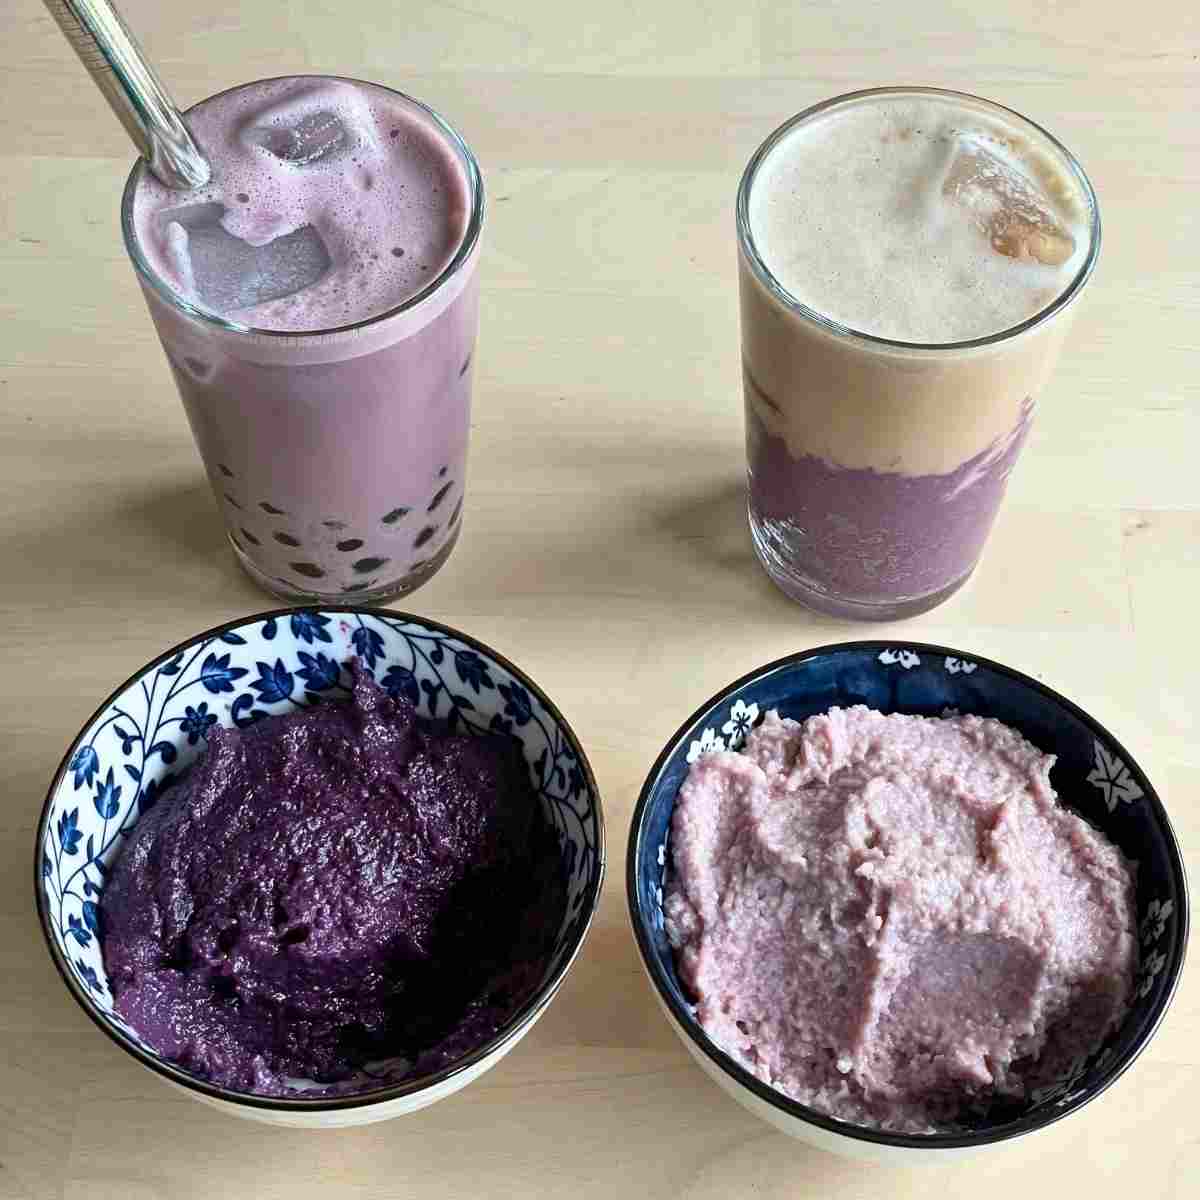 purple condensed milk vs fresh purple yam drink